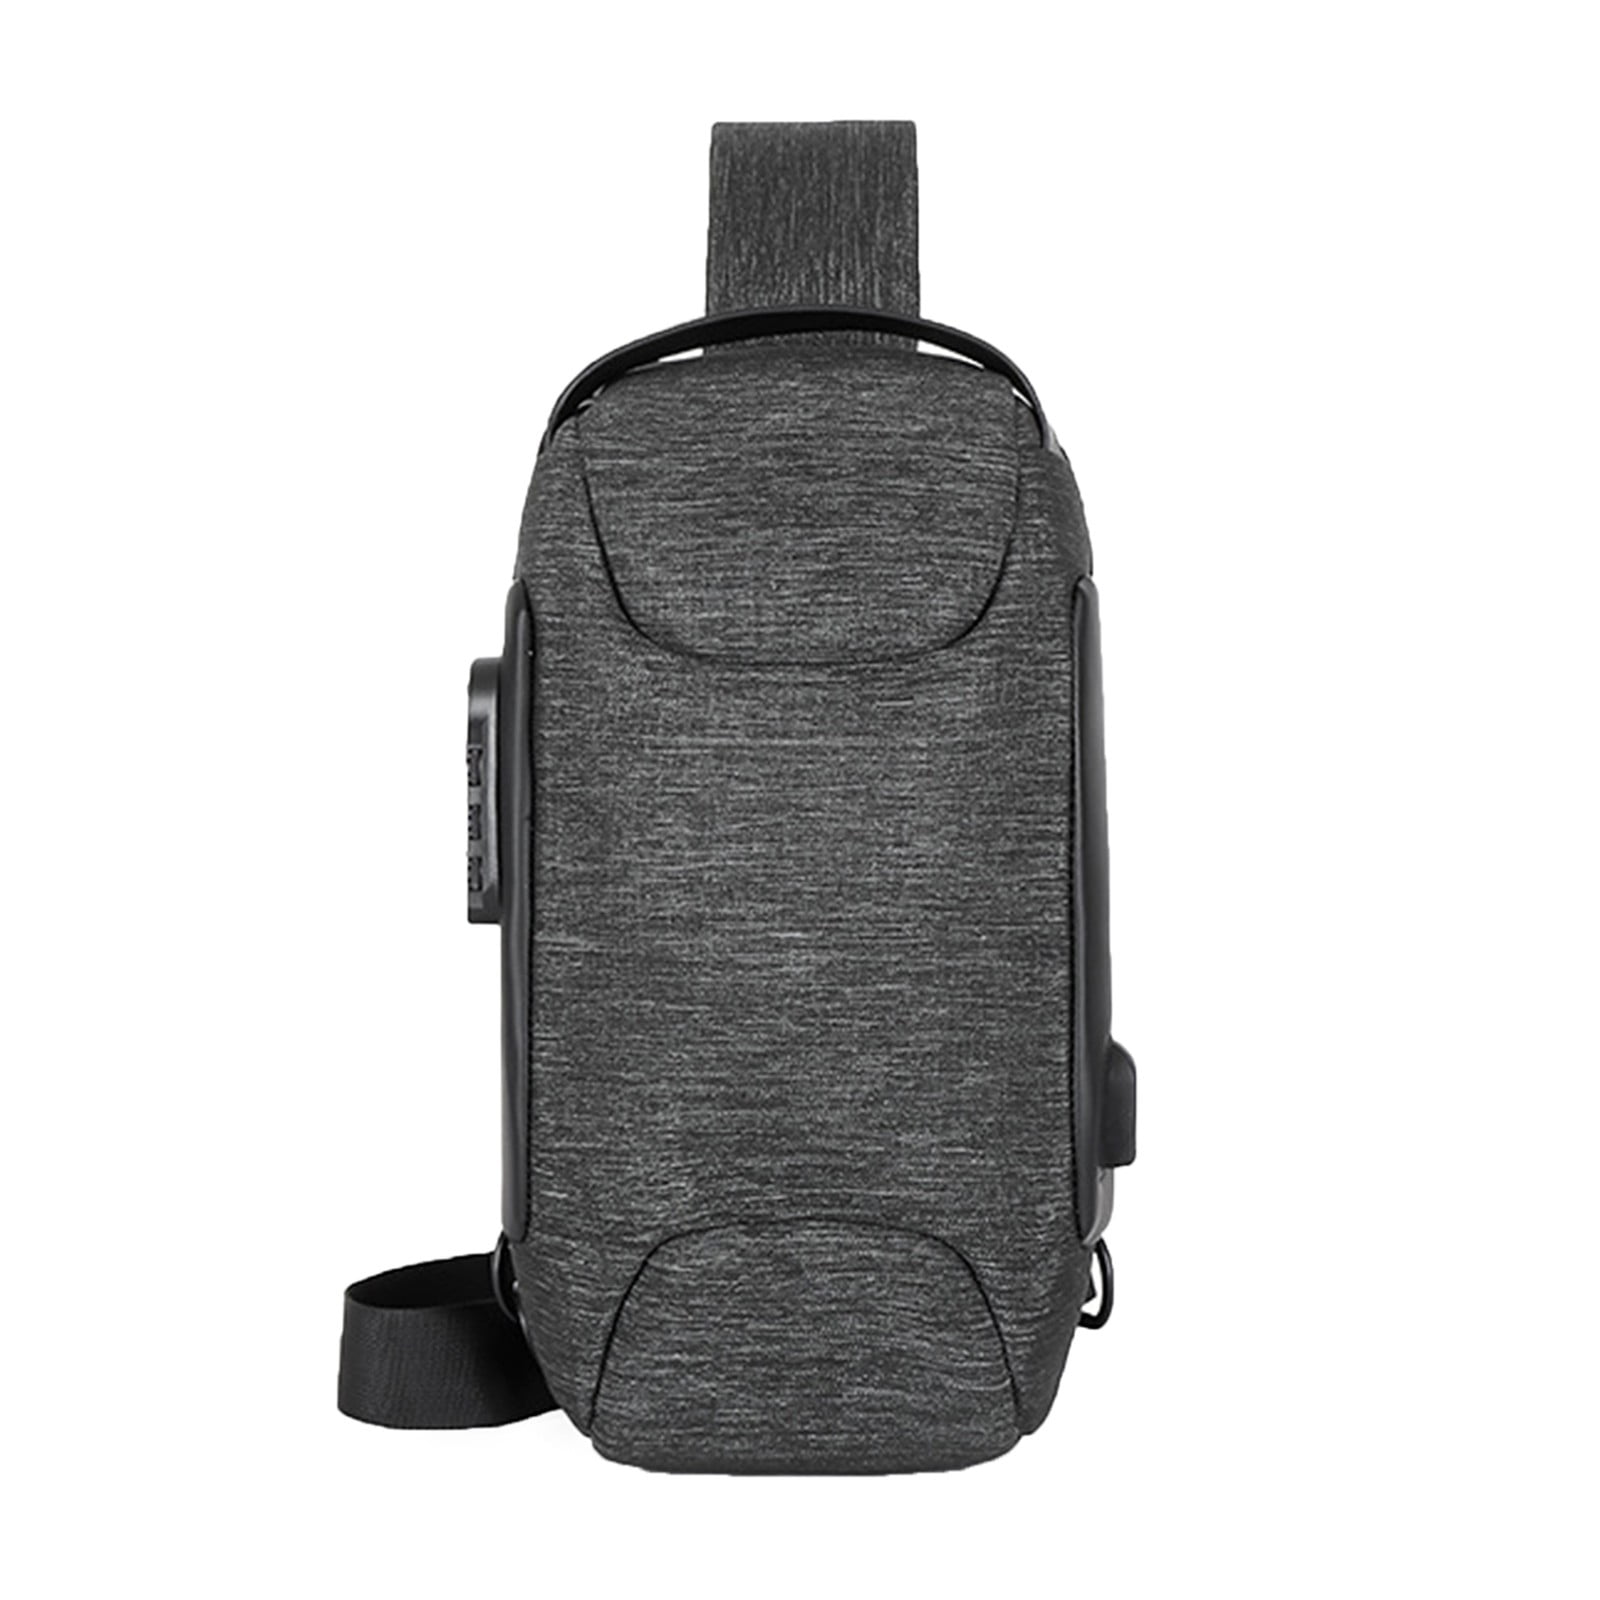 ASEIDFNSA Backpack Cute One Shoulder Bag Men'S Prevention Of Thieves ...